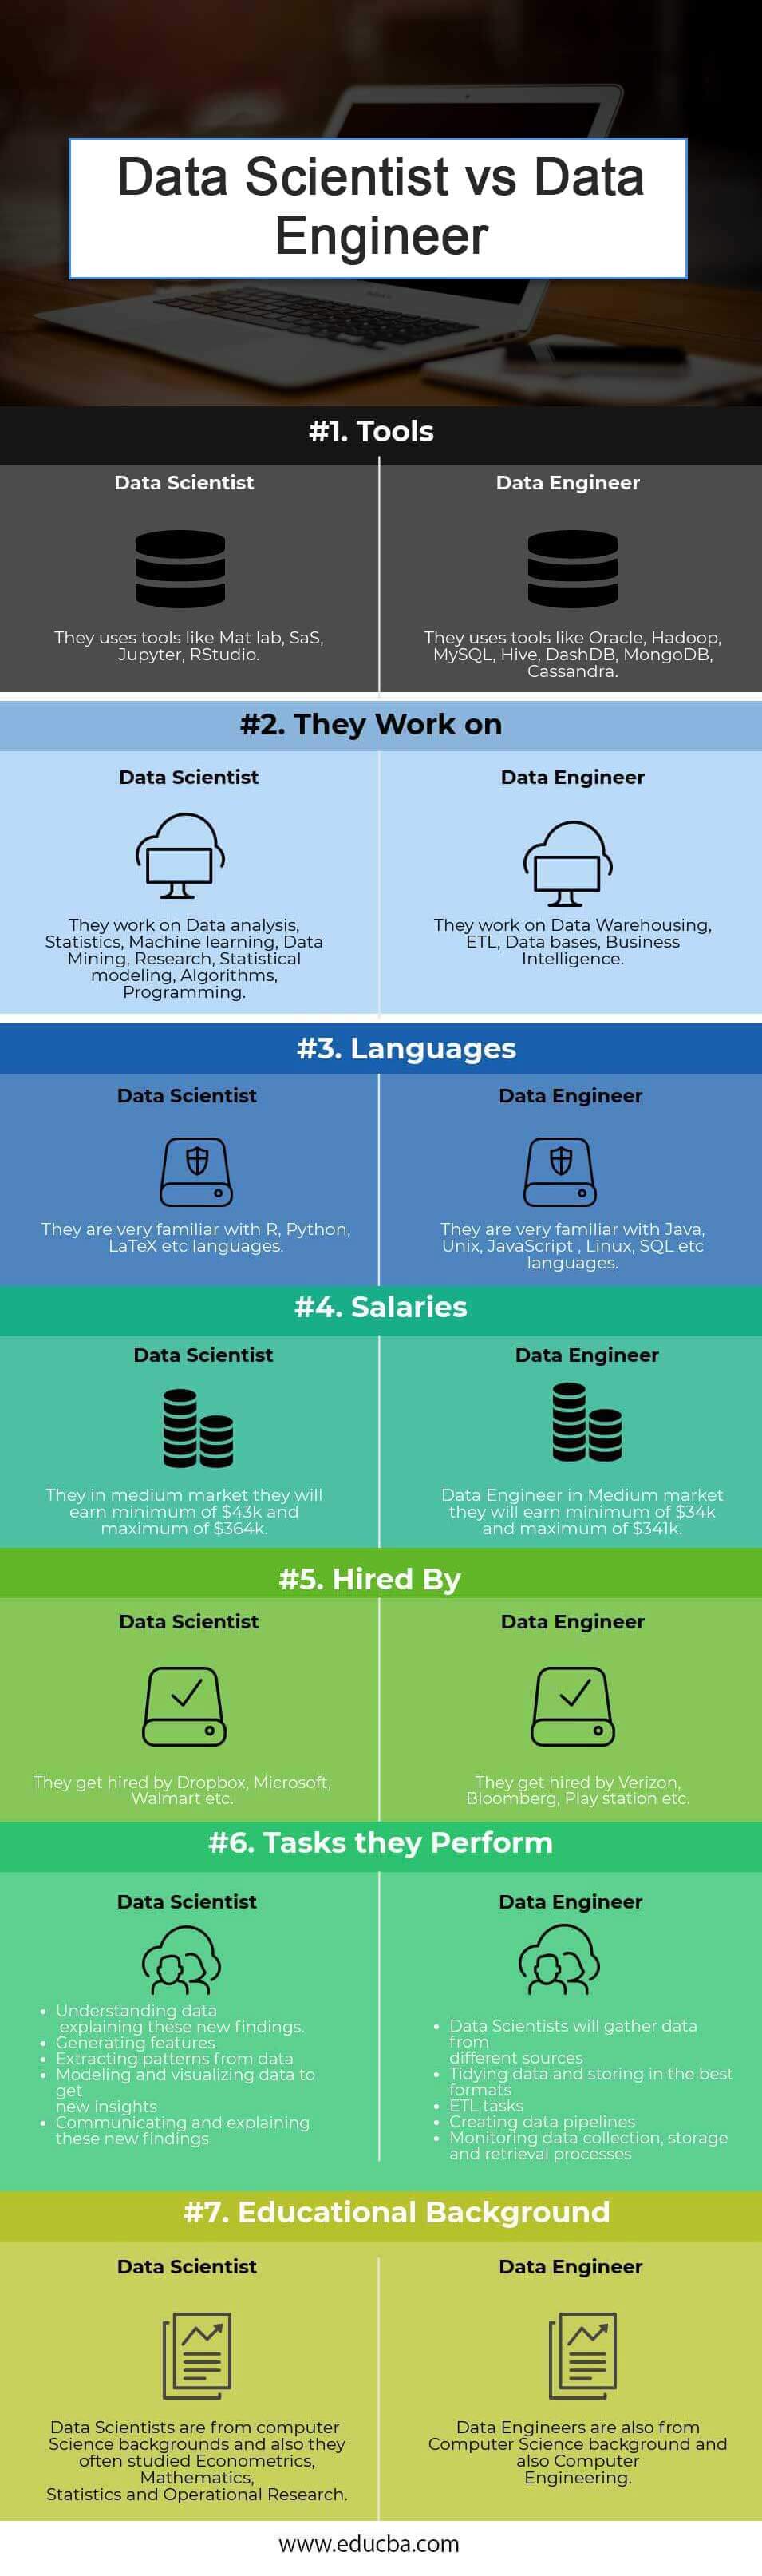 Data-Scientist-vs-Data-Engineer-info